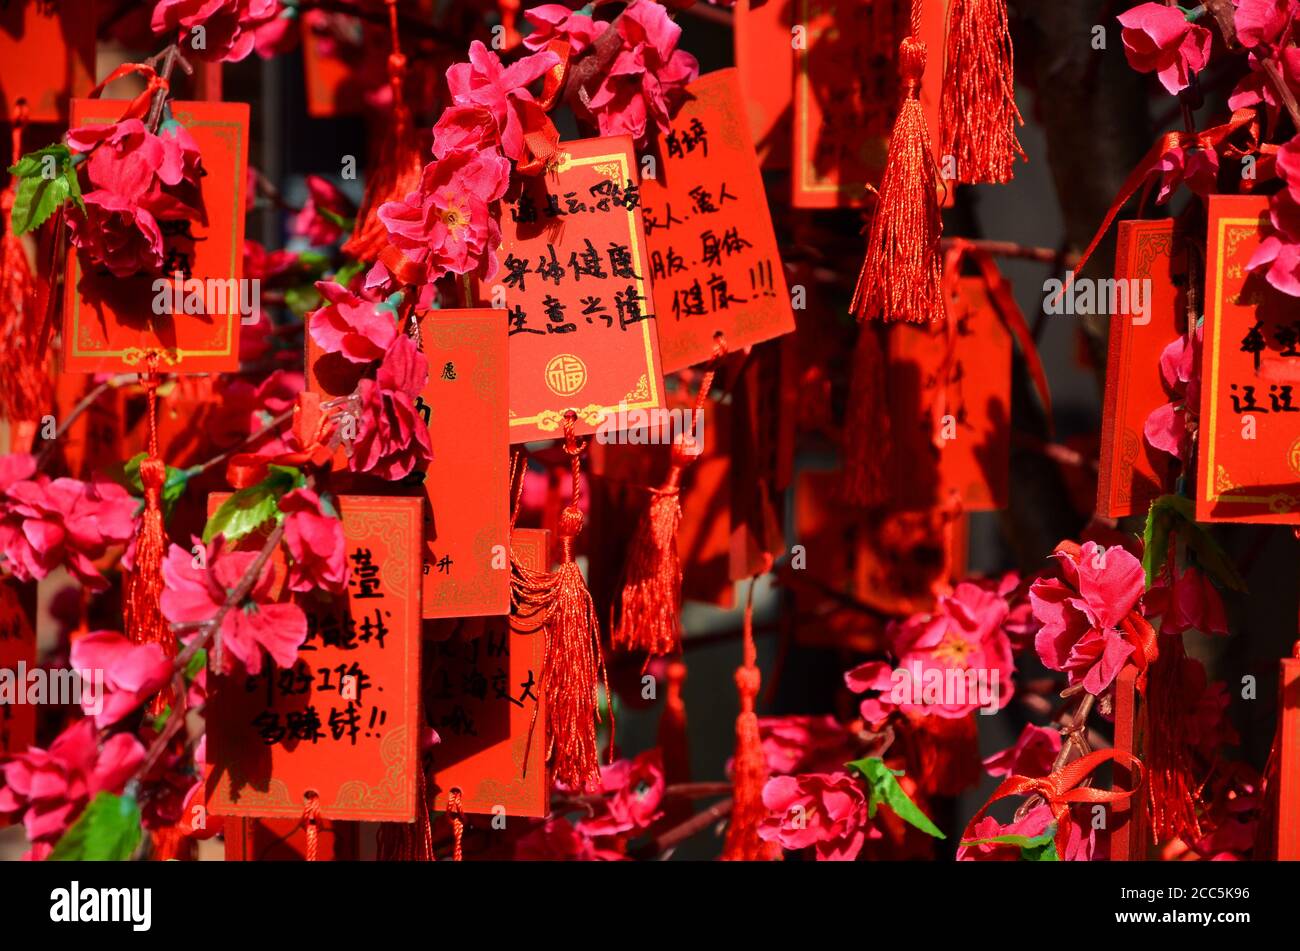 SHANGHAI, CHINA - MAY 7 2017: Chinese red wishes tablets at Tianzifang touristic arts and crafts enclave Shanghai, China Stock Photo